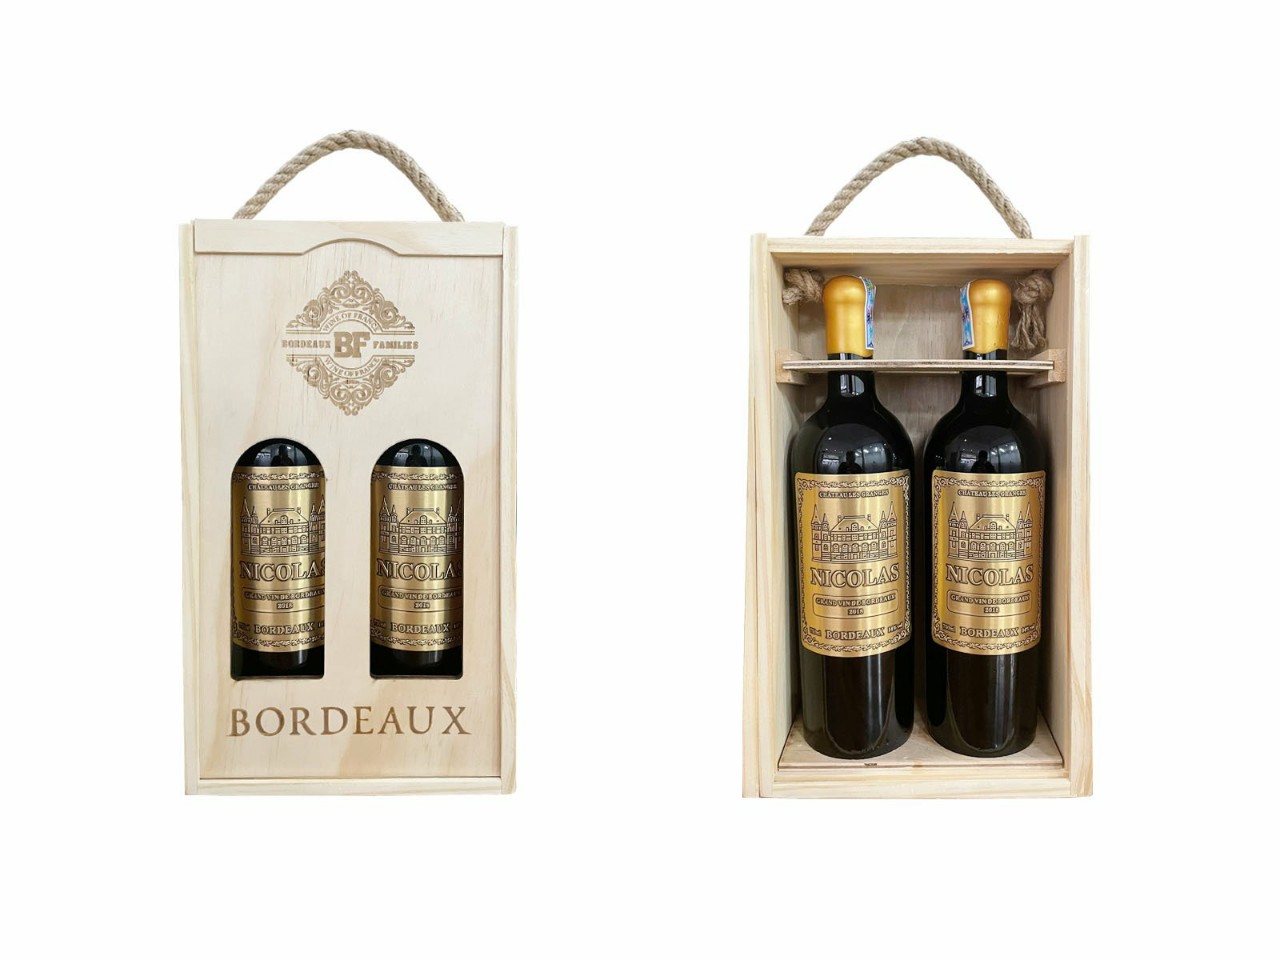 Set quà 2 chai vang Nicolas Bordeaux hộp gỗ